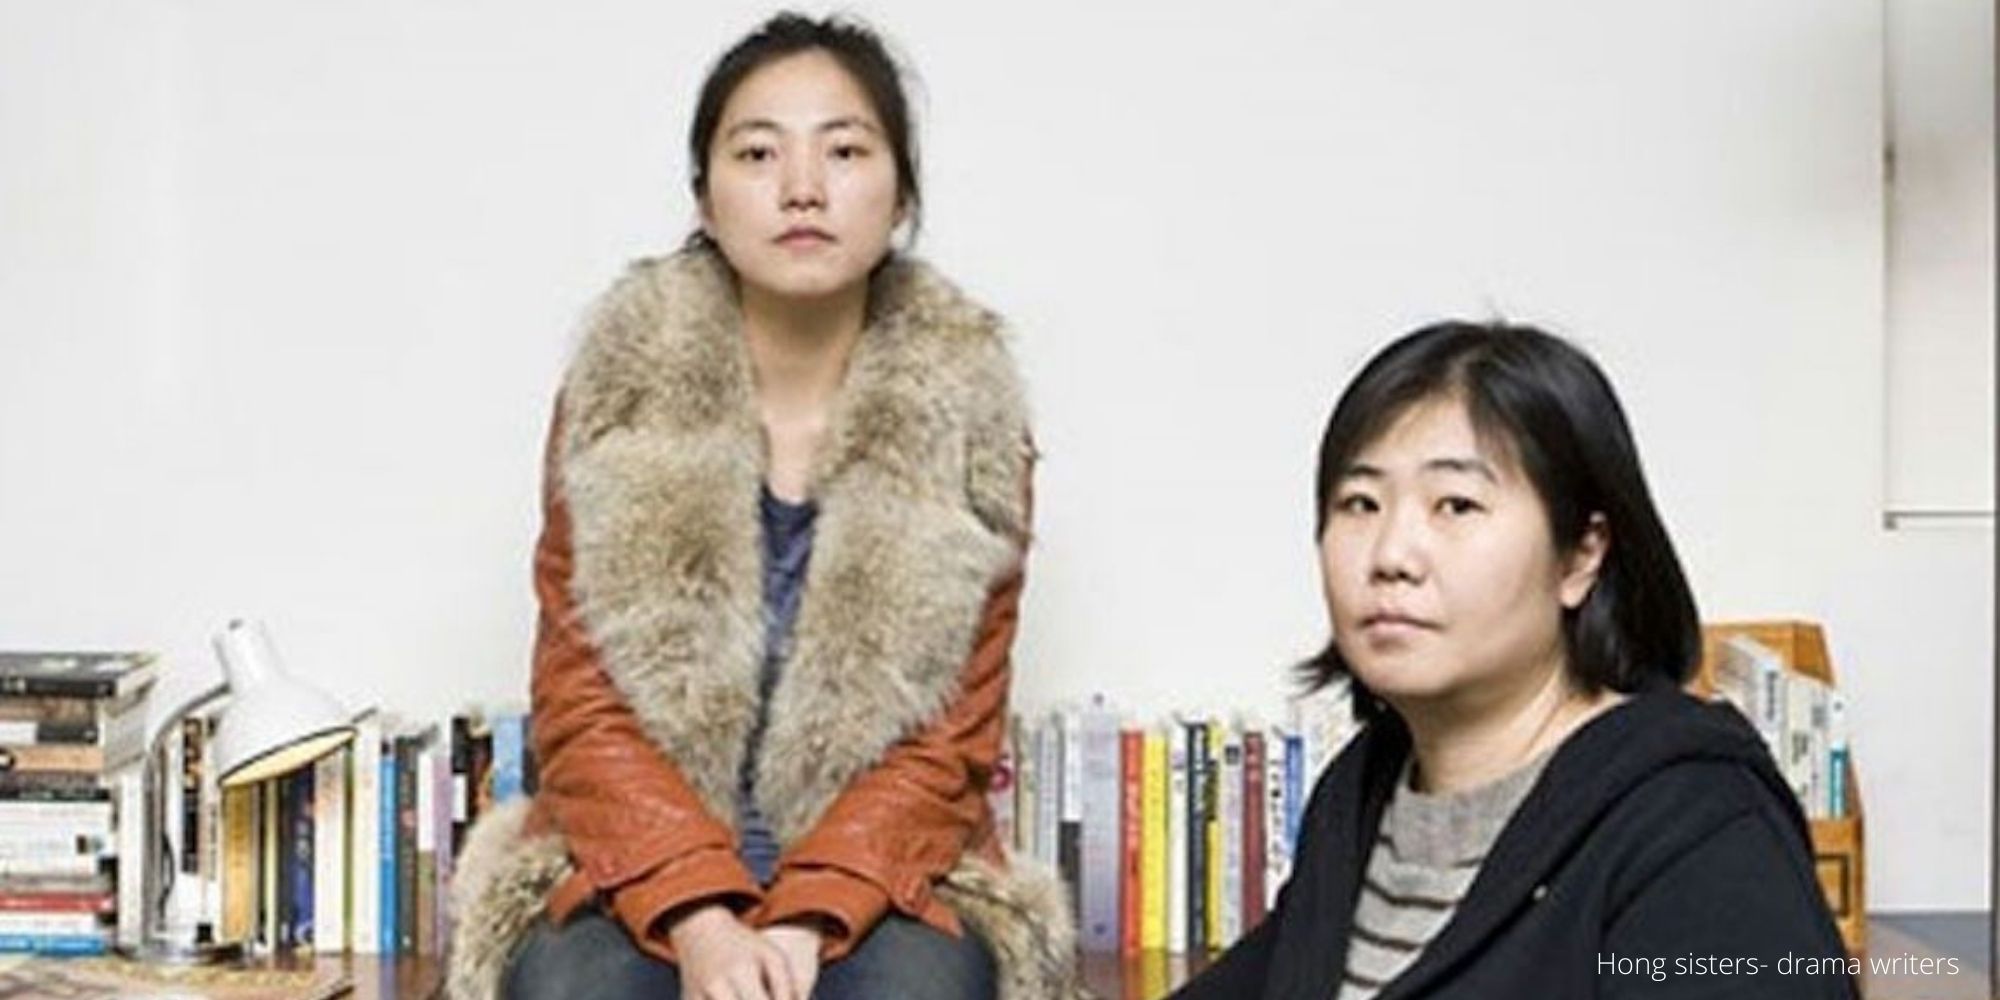 Hong sisters- drama writers